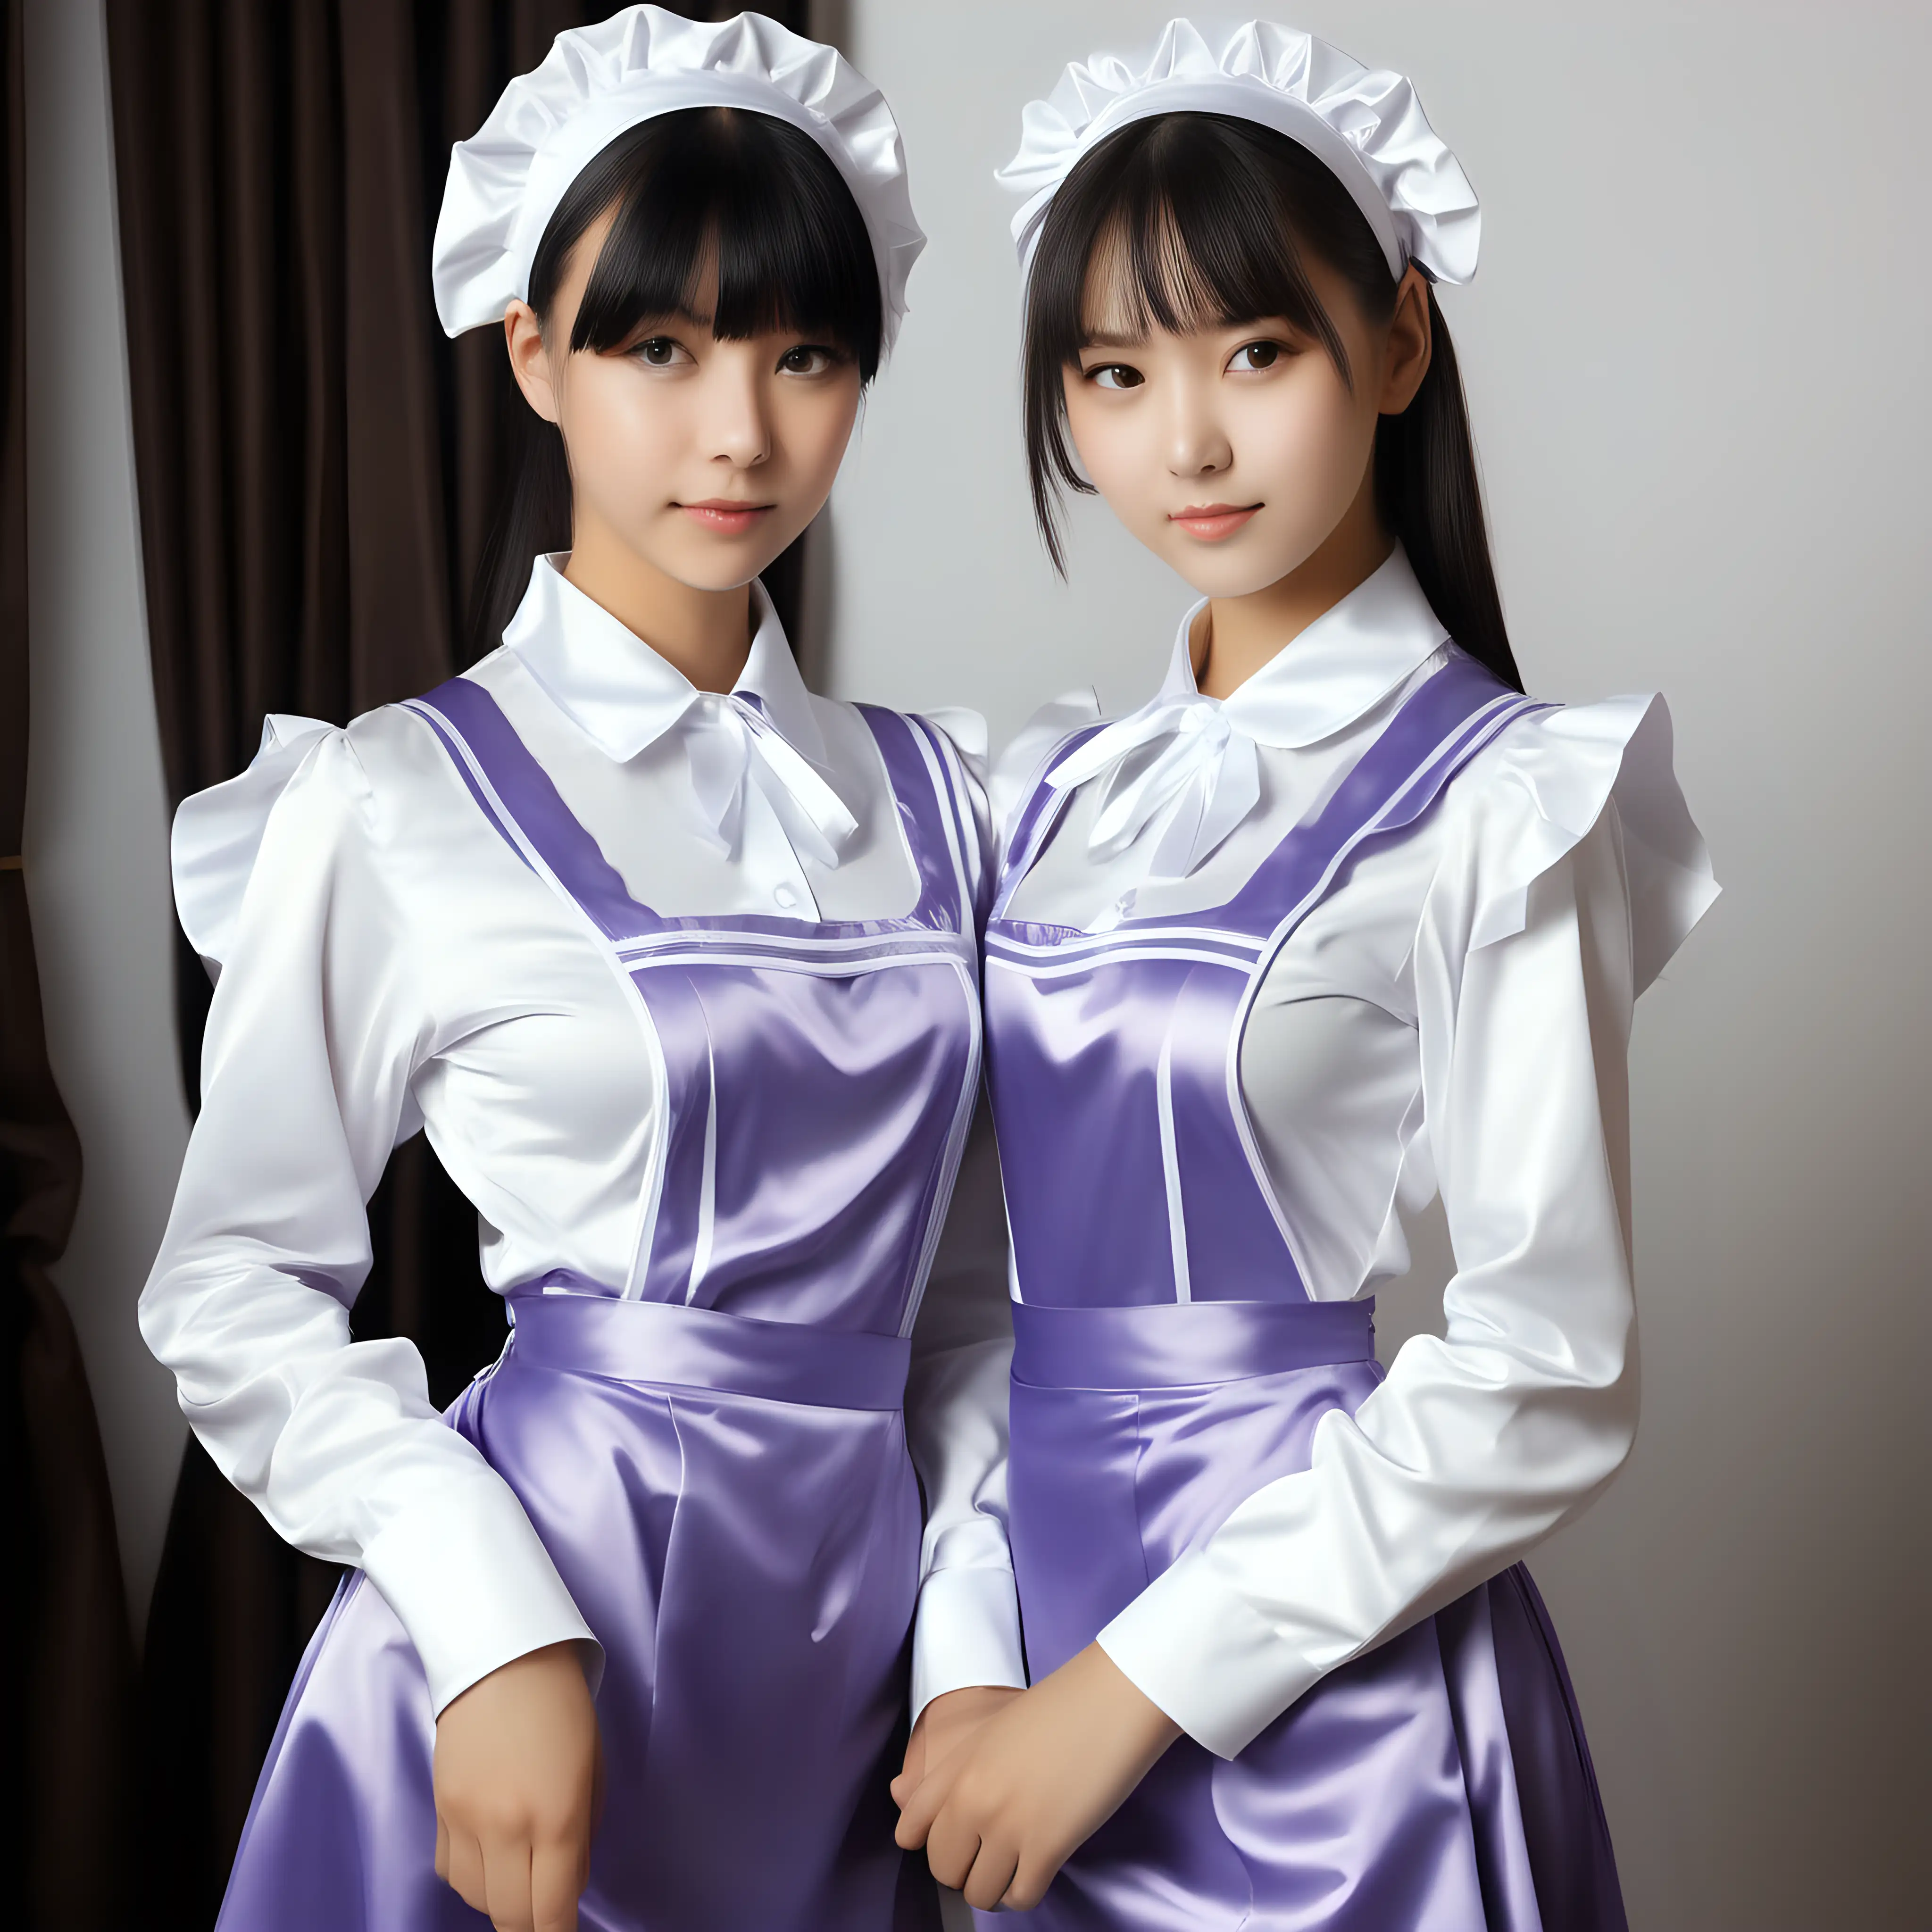 Elegant Maid Uniforms Graceful Girls in Satin Attire